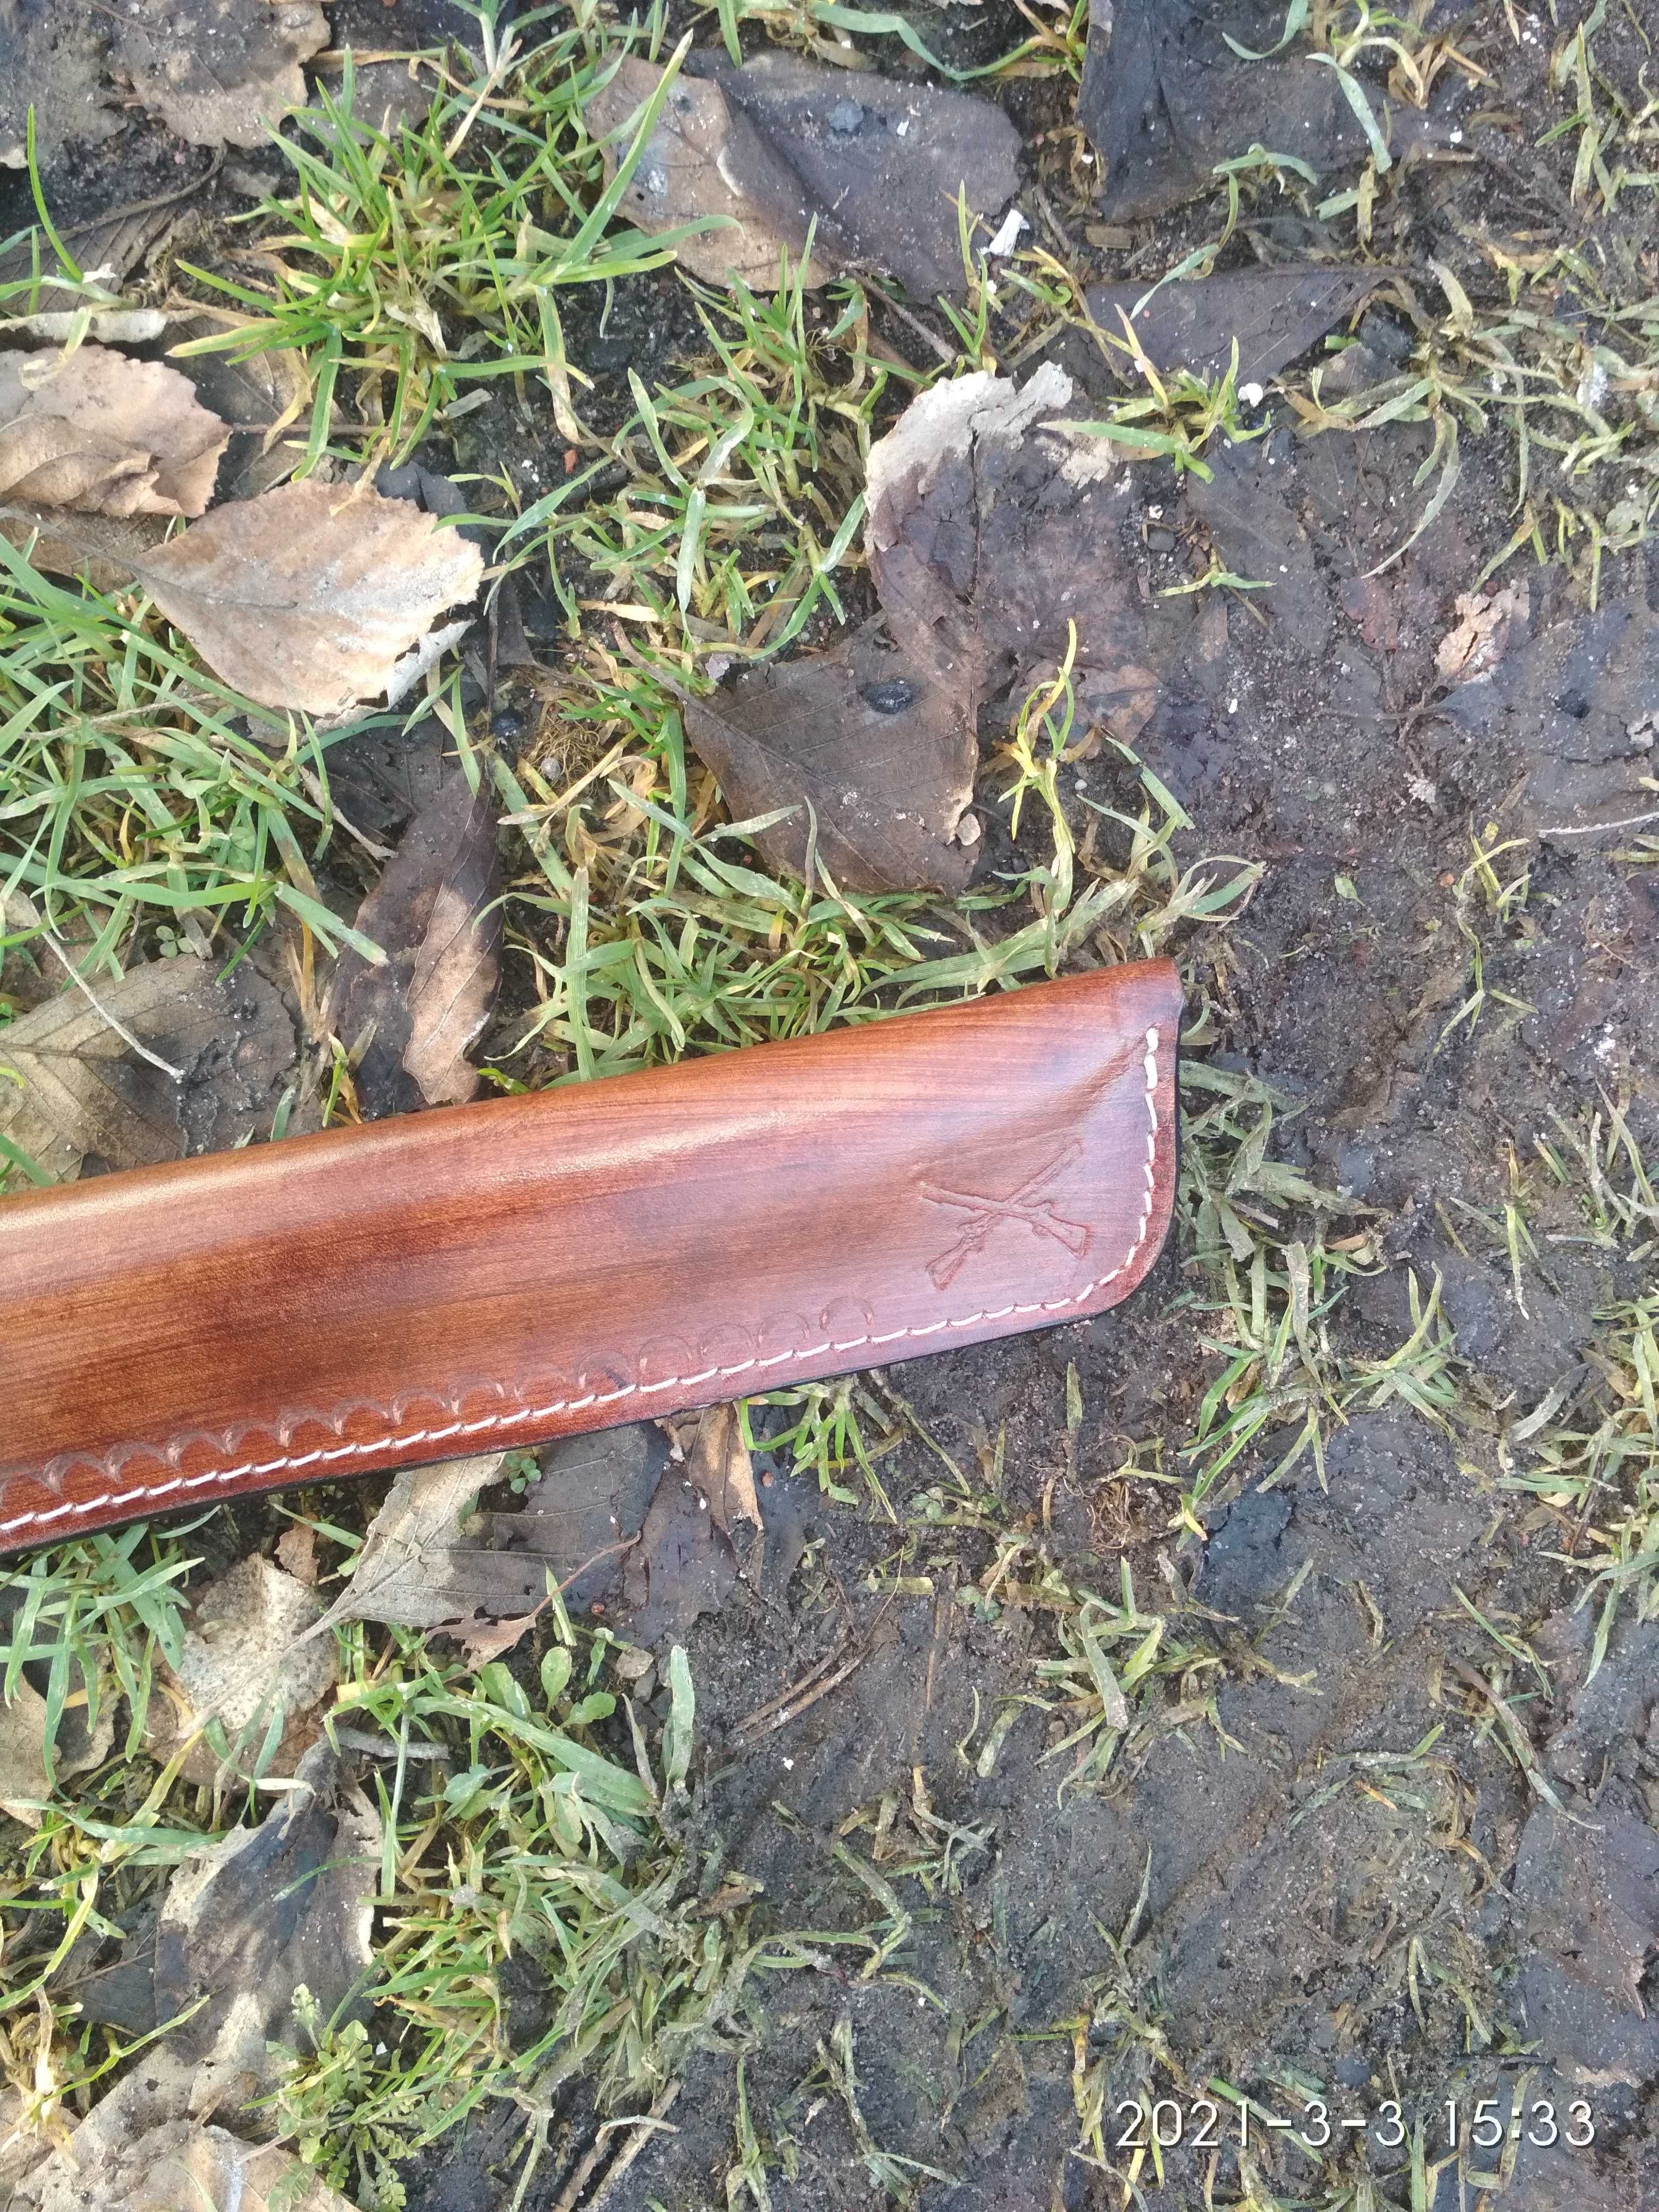 kabura skórzana pokrowiec na karabinek Remington